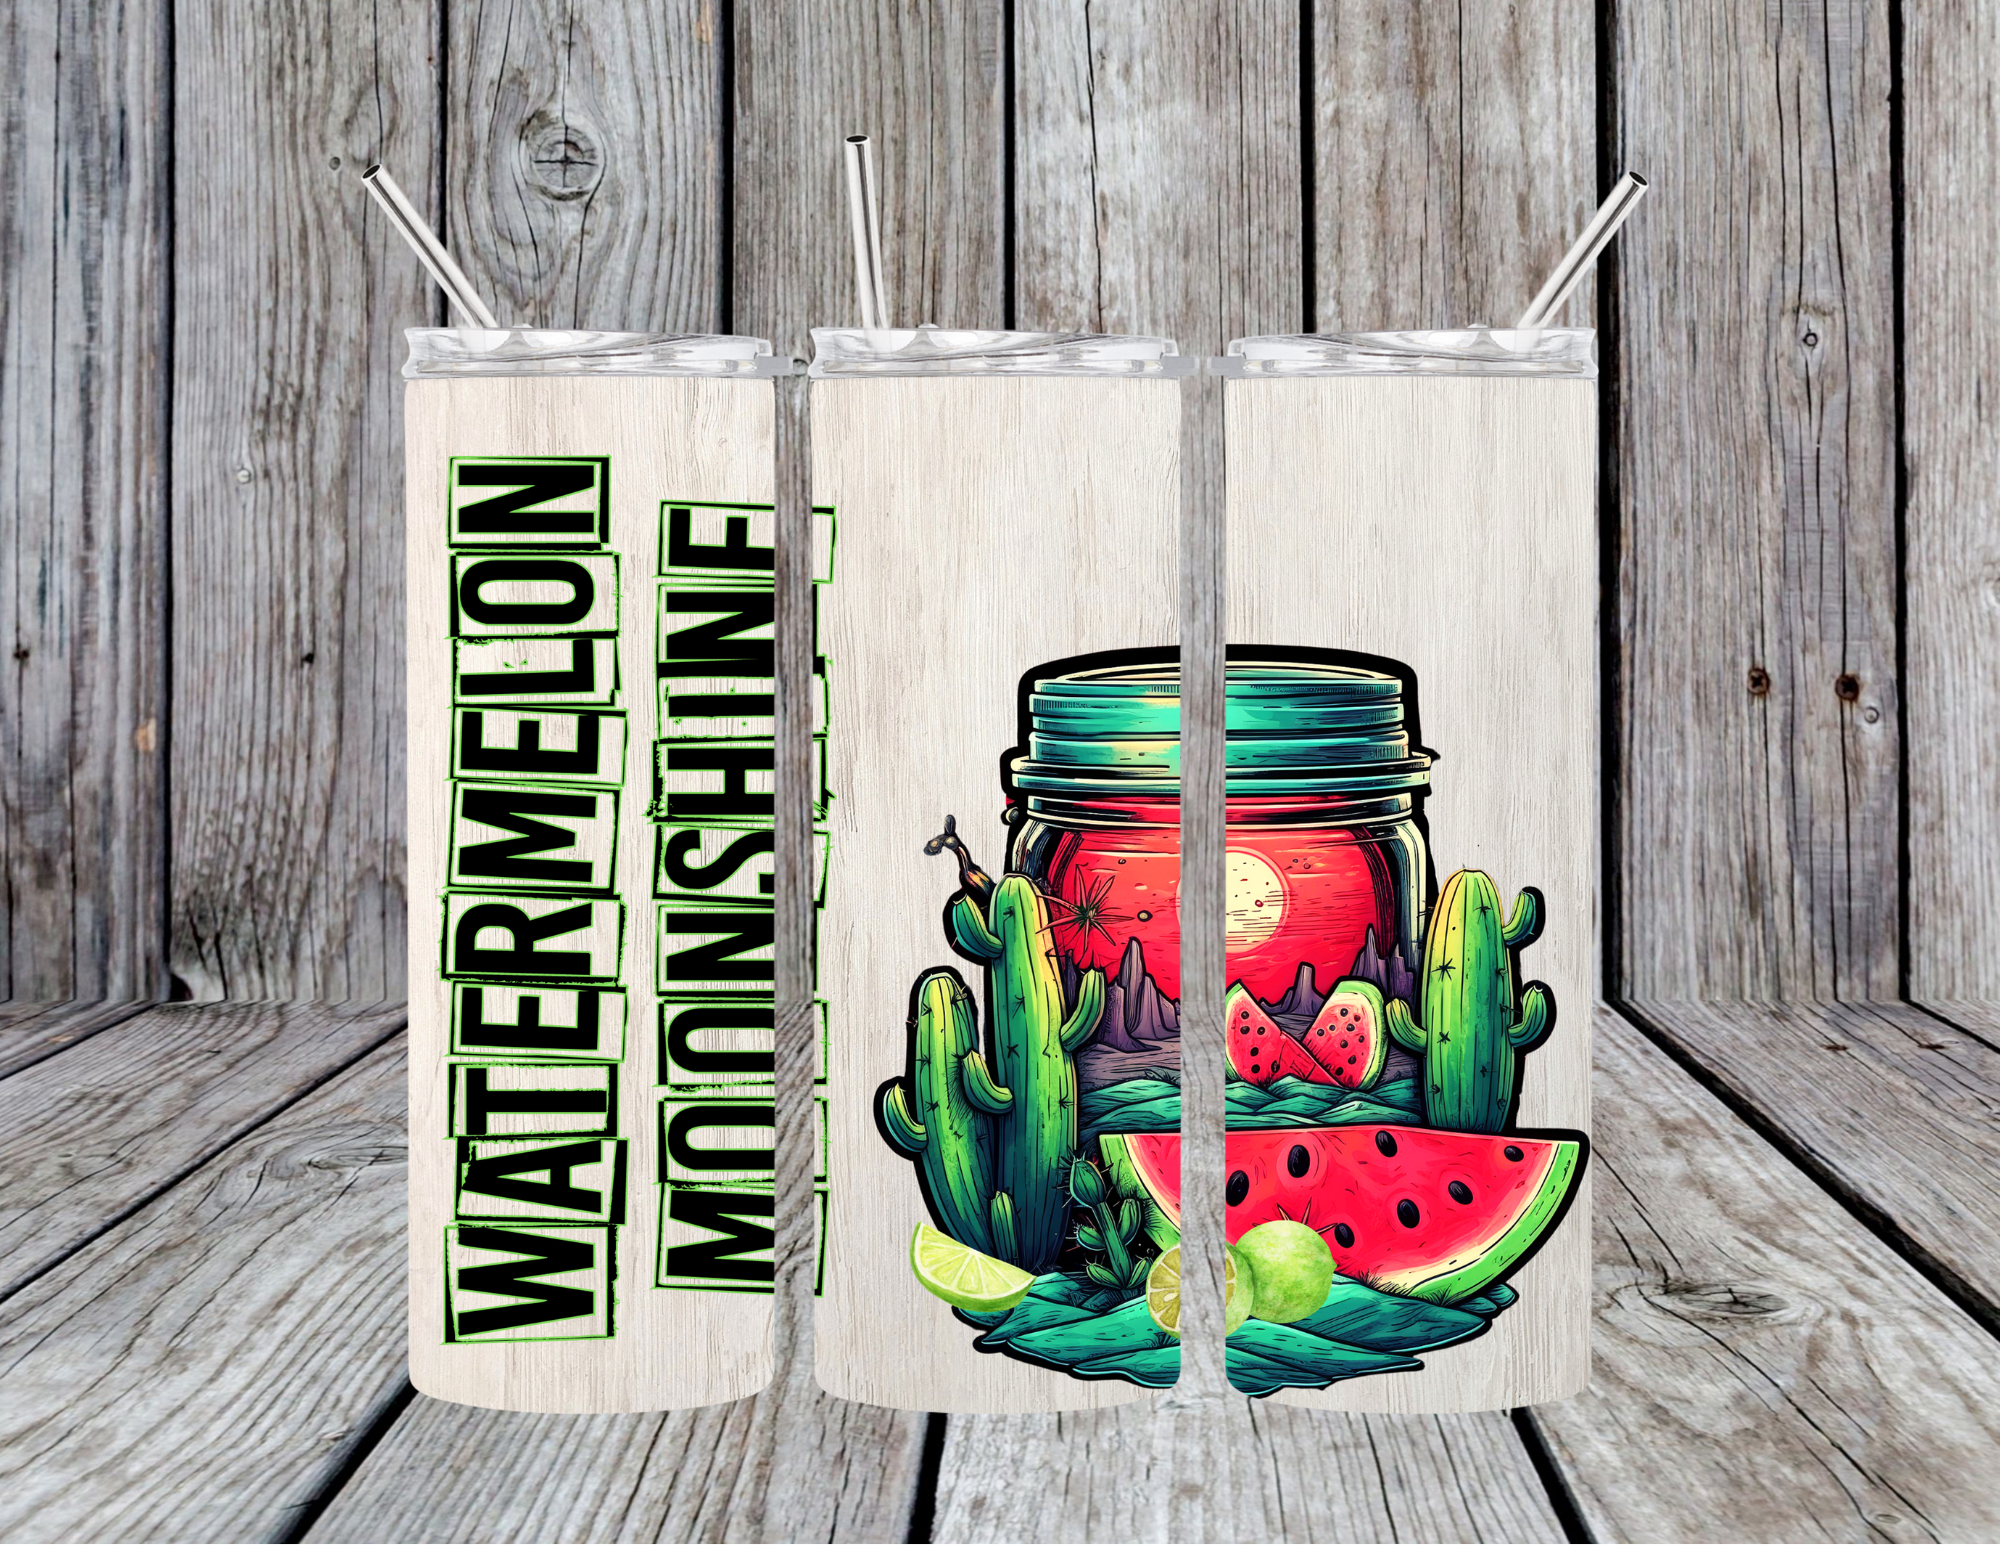 Watermelon Moonshine 40oz with Cacti & Skulls